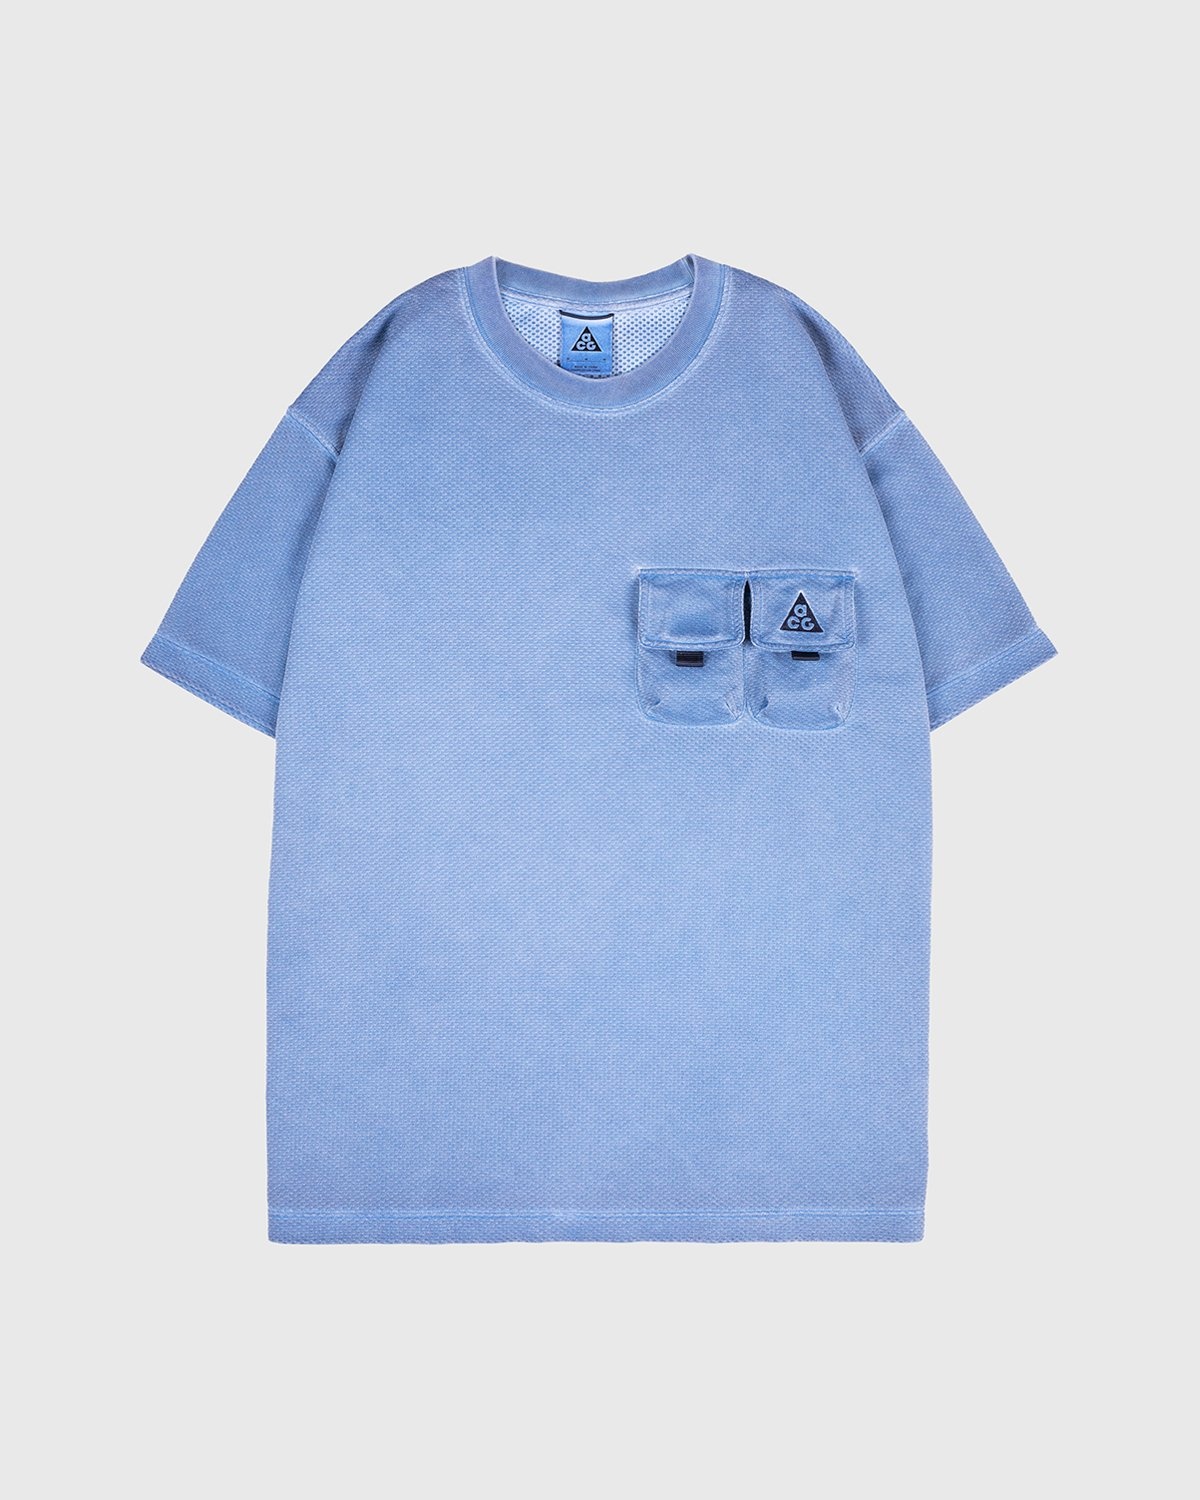 Nike ACG – M NRG ACG Watchman Peak SS Blue - T-Shirts - Blue - Image 1